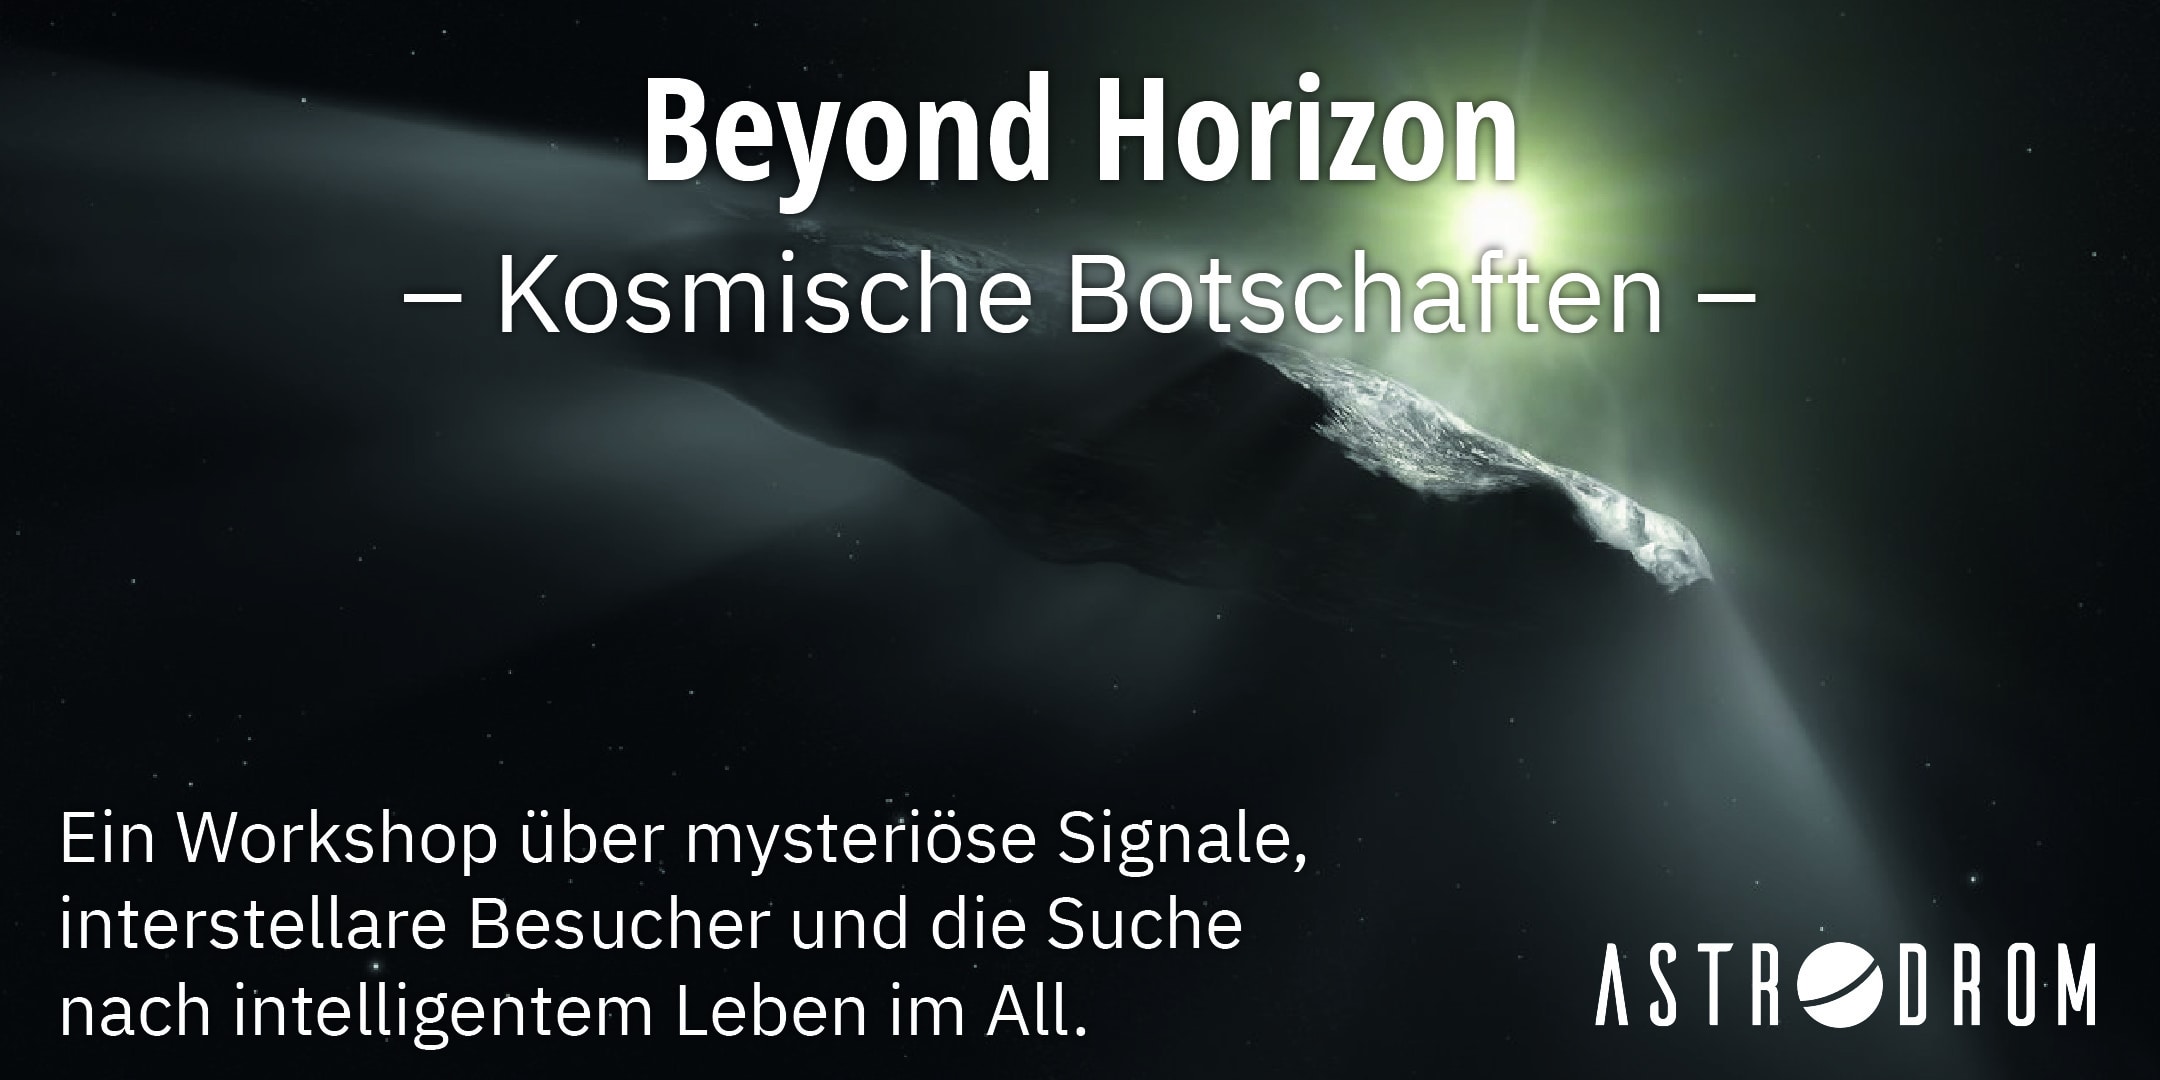 Cover Astrodrom Workshop "Beyond Horizon" at the IdeenExpo 2022